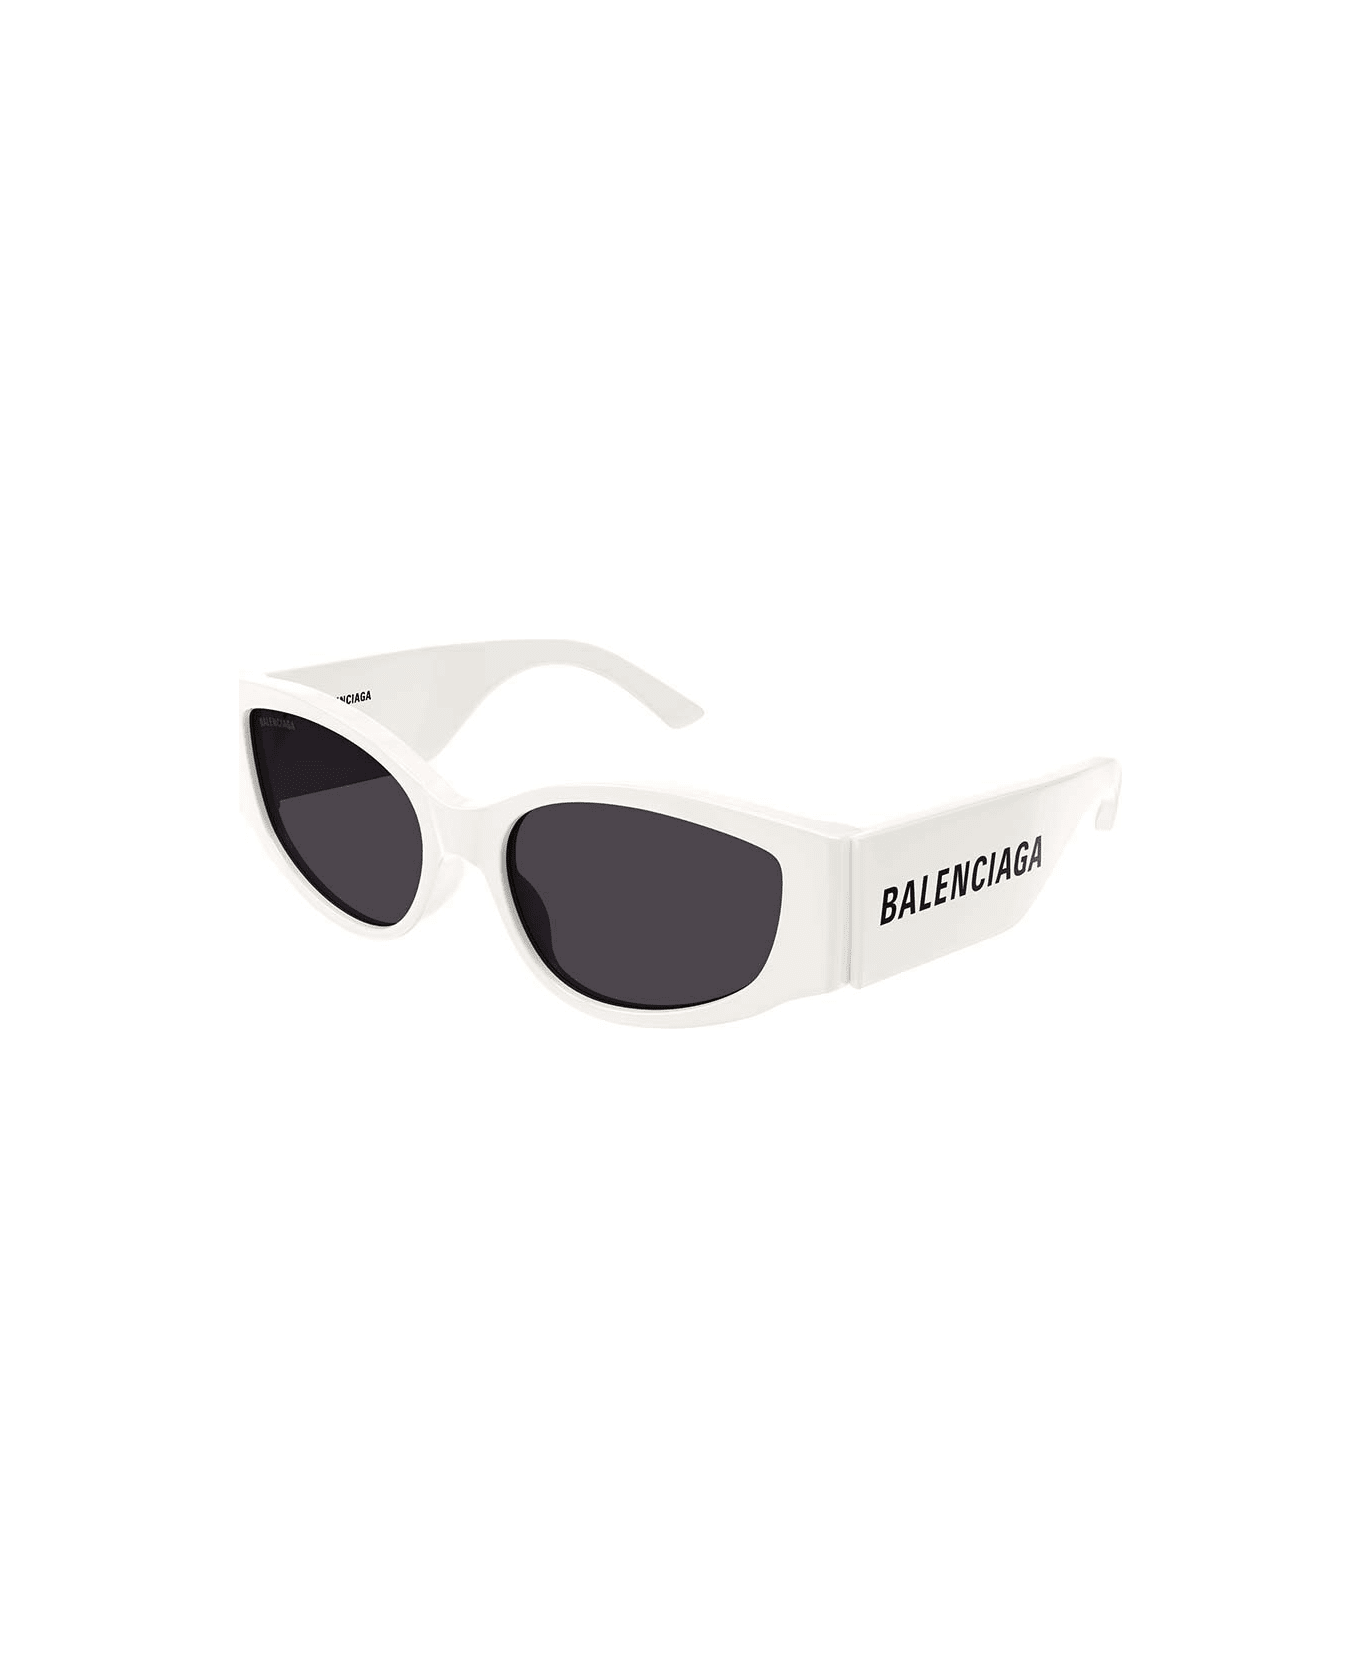 Balenciaga Eyewear Regal Sunglasses - Nero/Grigio